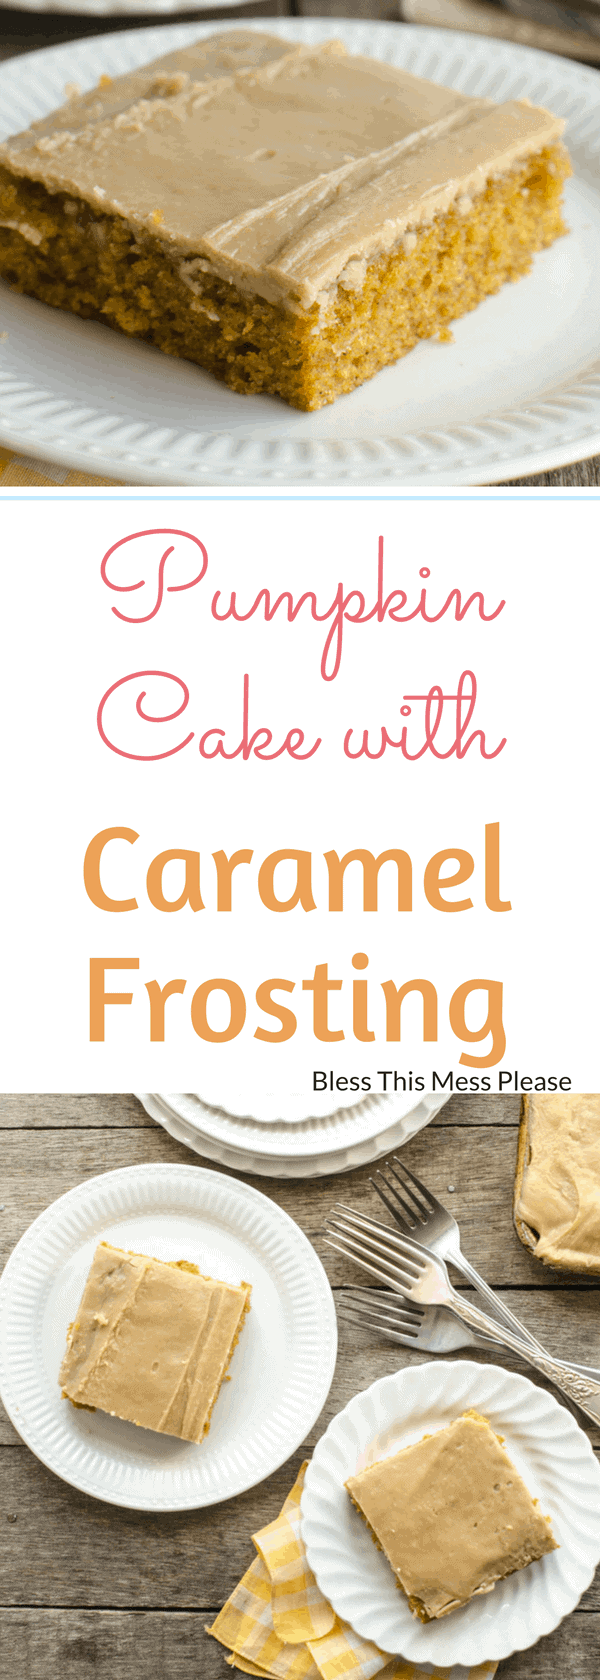 Pumpkin Sheet Cake with Caramel Frosting